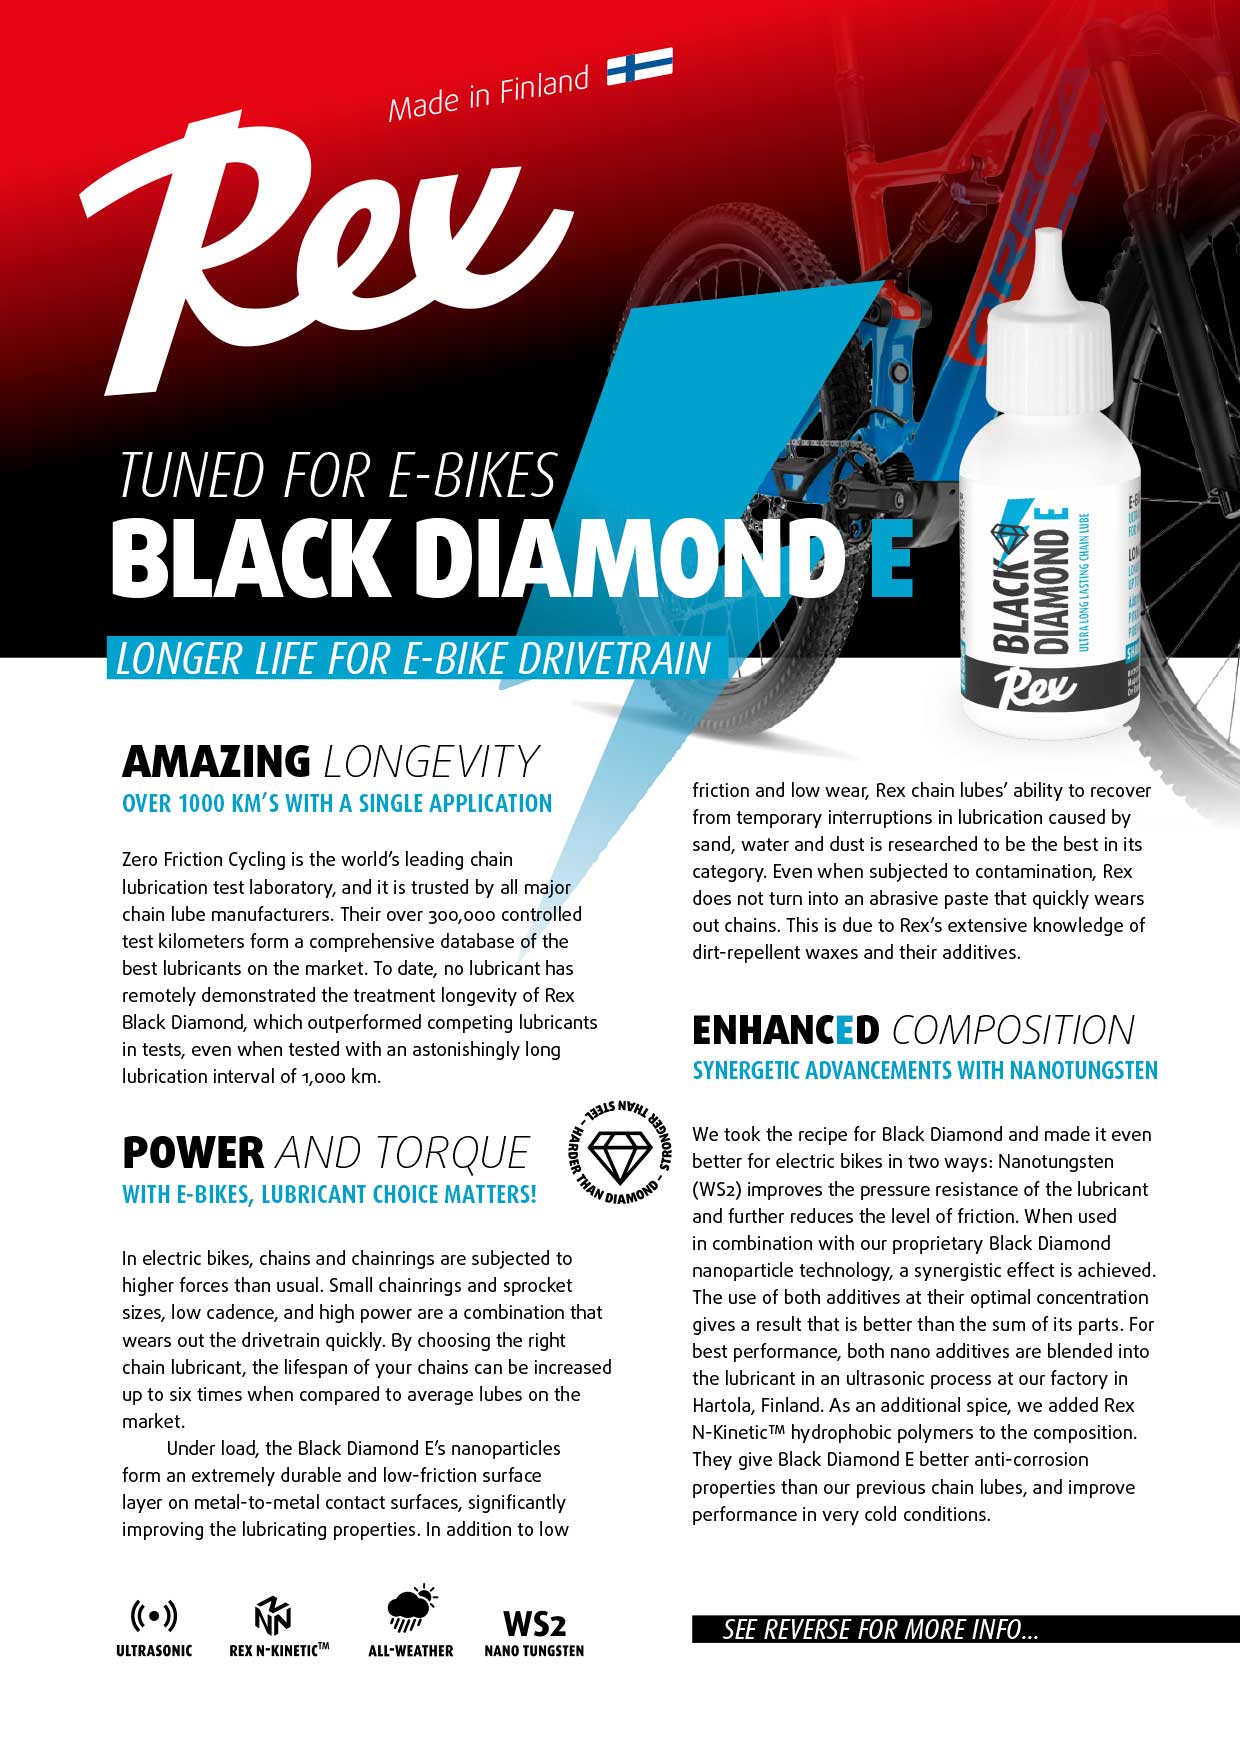 Rex Black Diamond Chain Lube